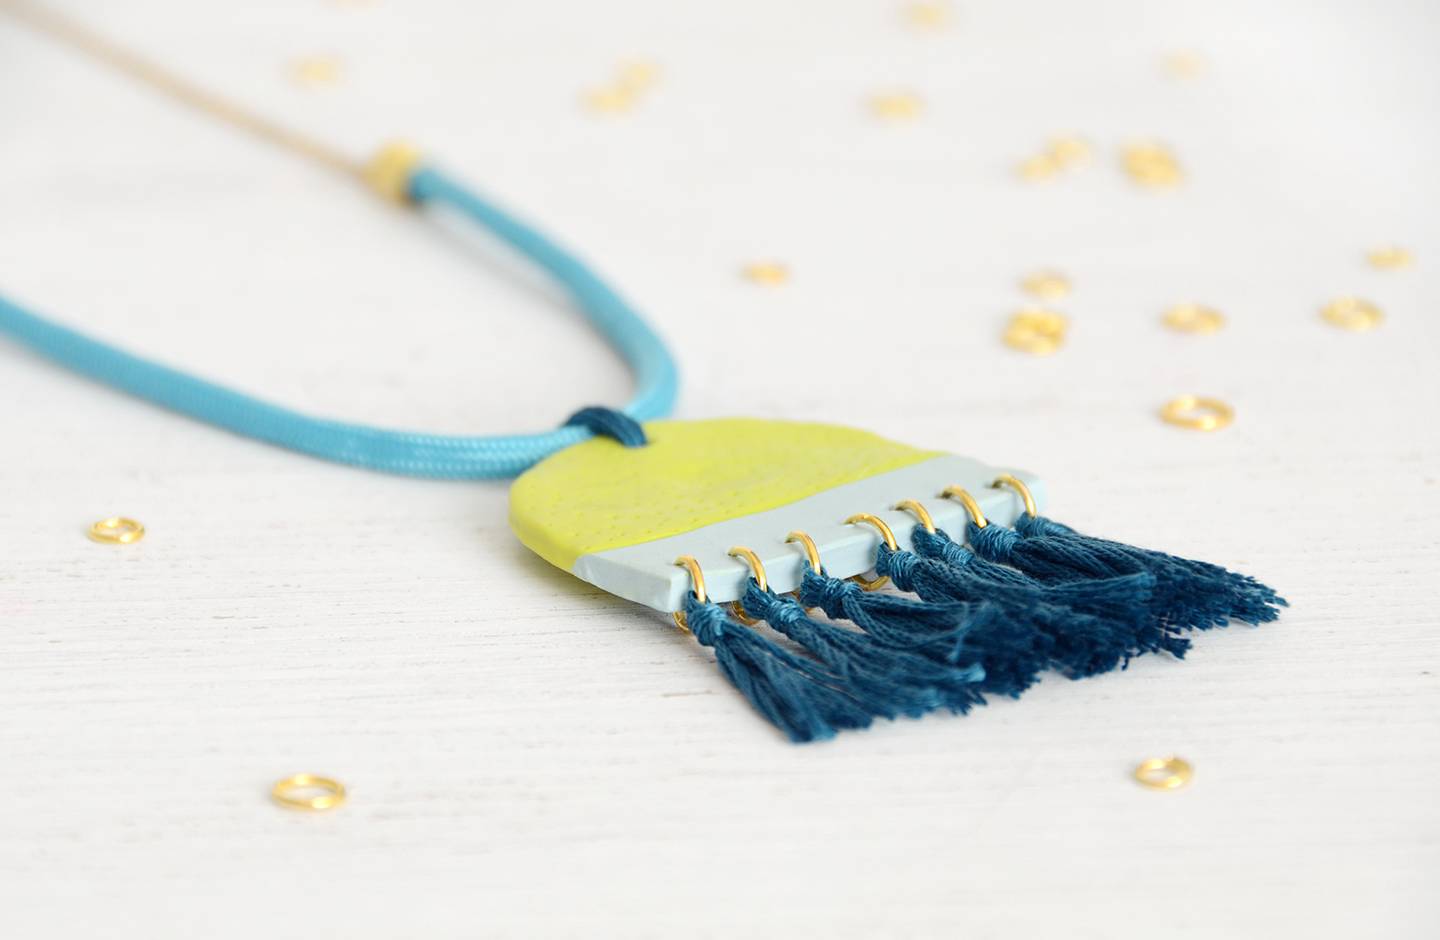 Make A Statement: DIY Clay Pendant Tassel Necklace